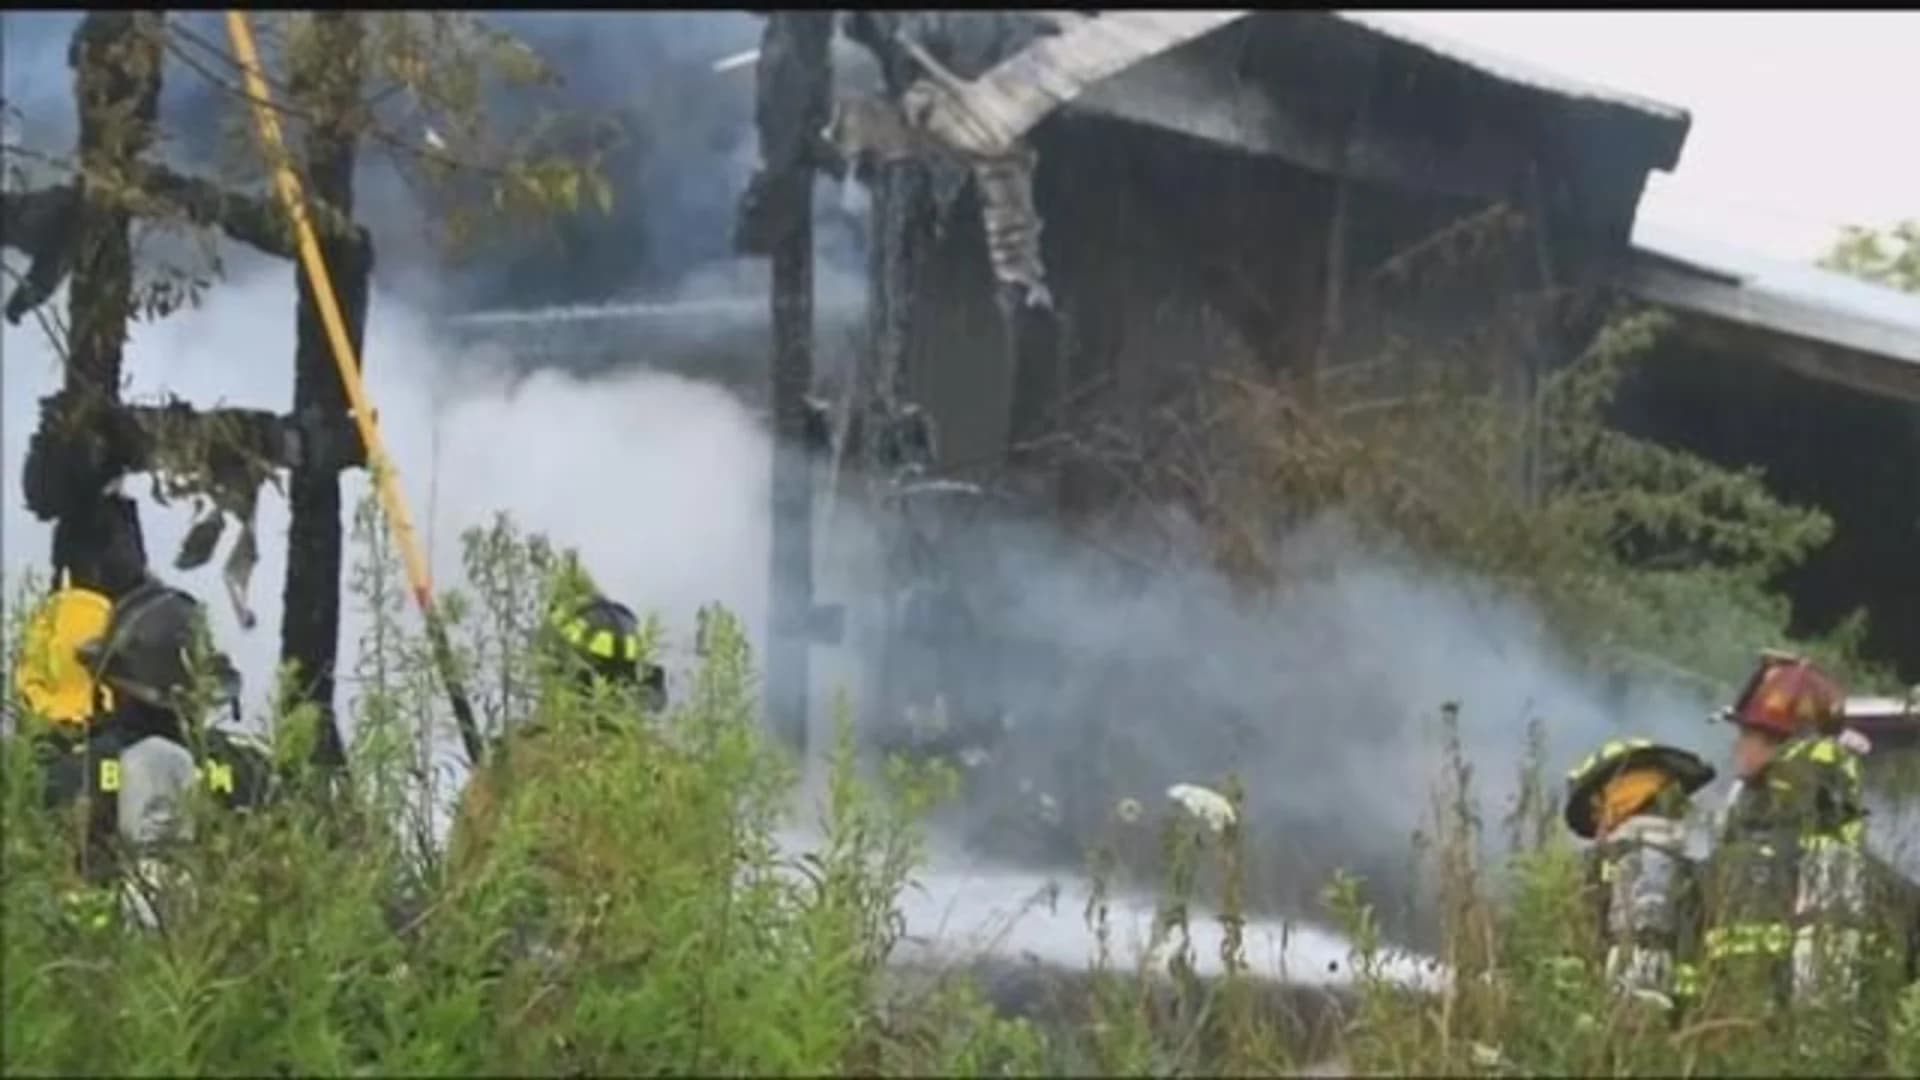 Crews battle barn fire in Litchfield